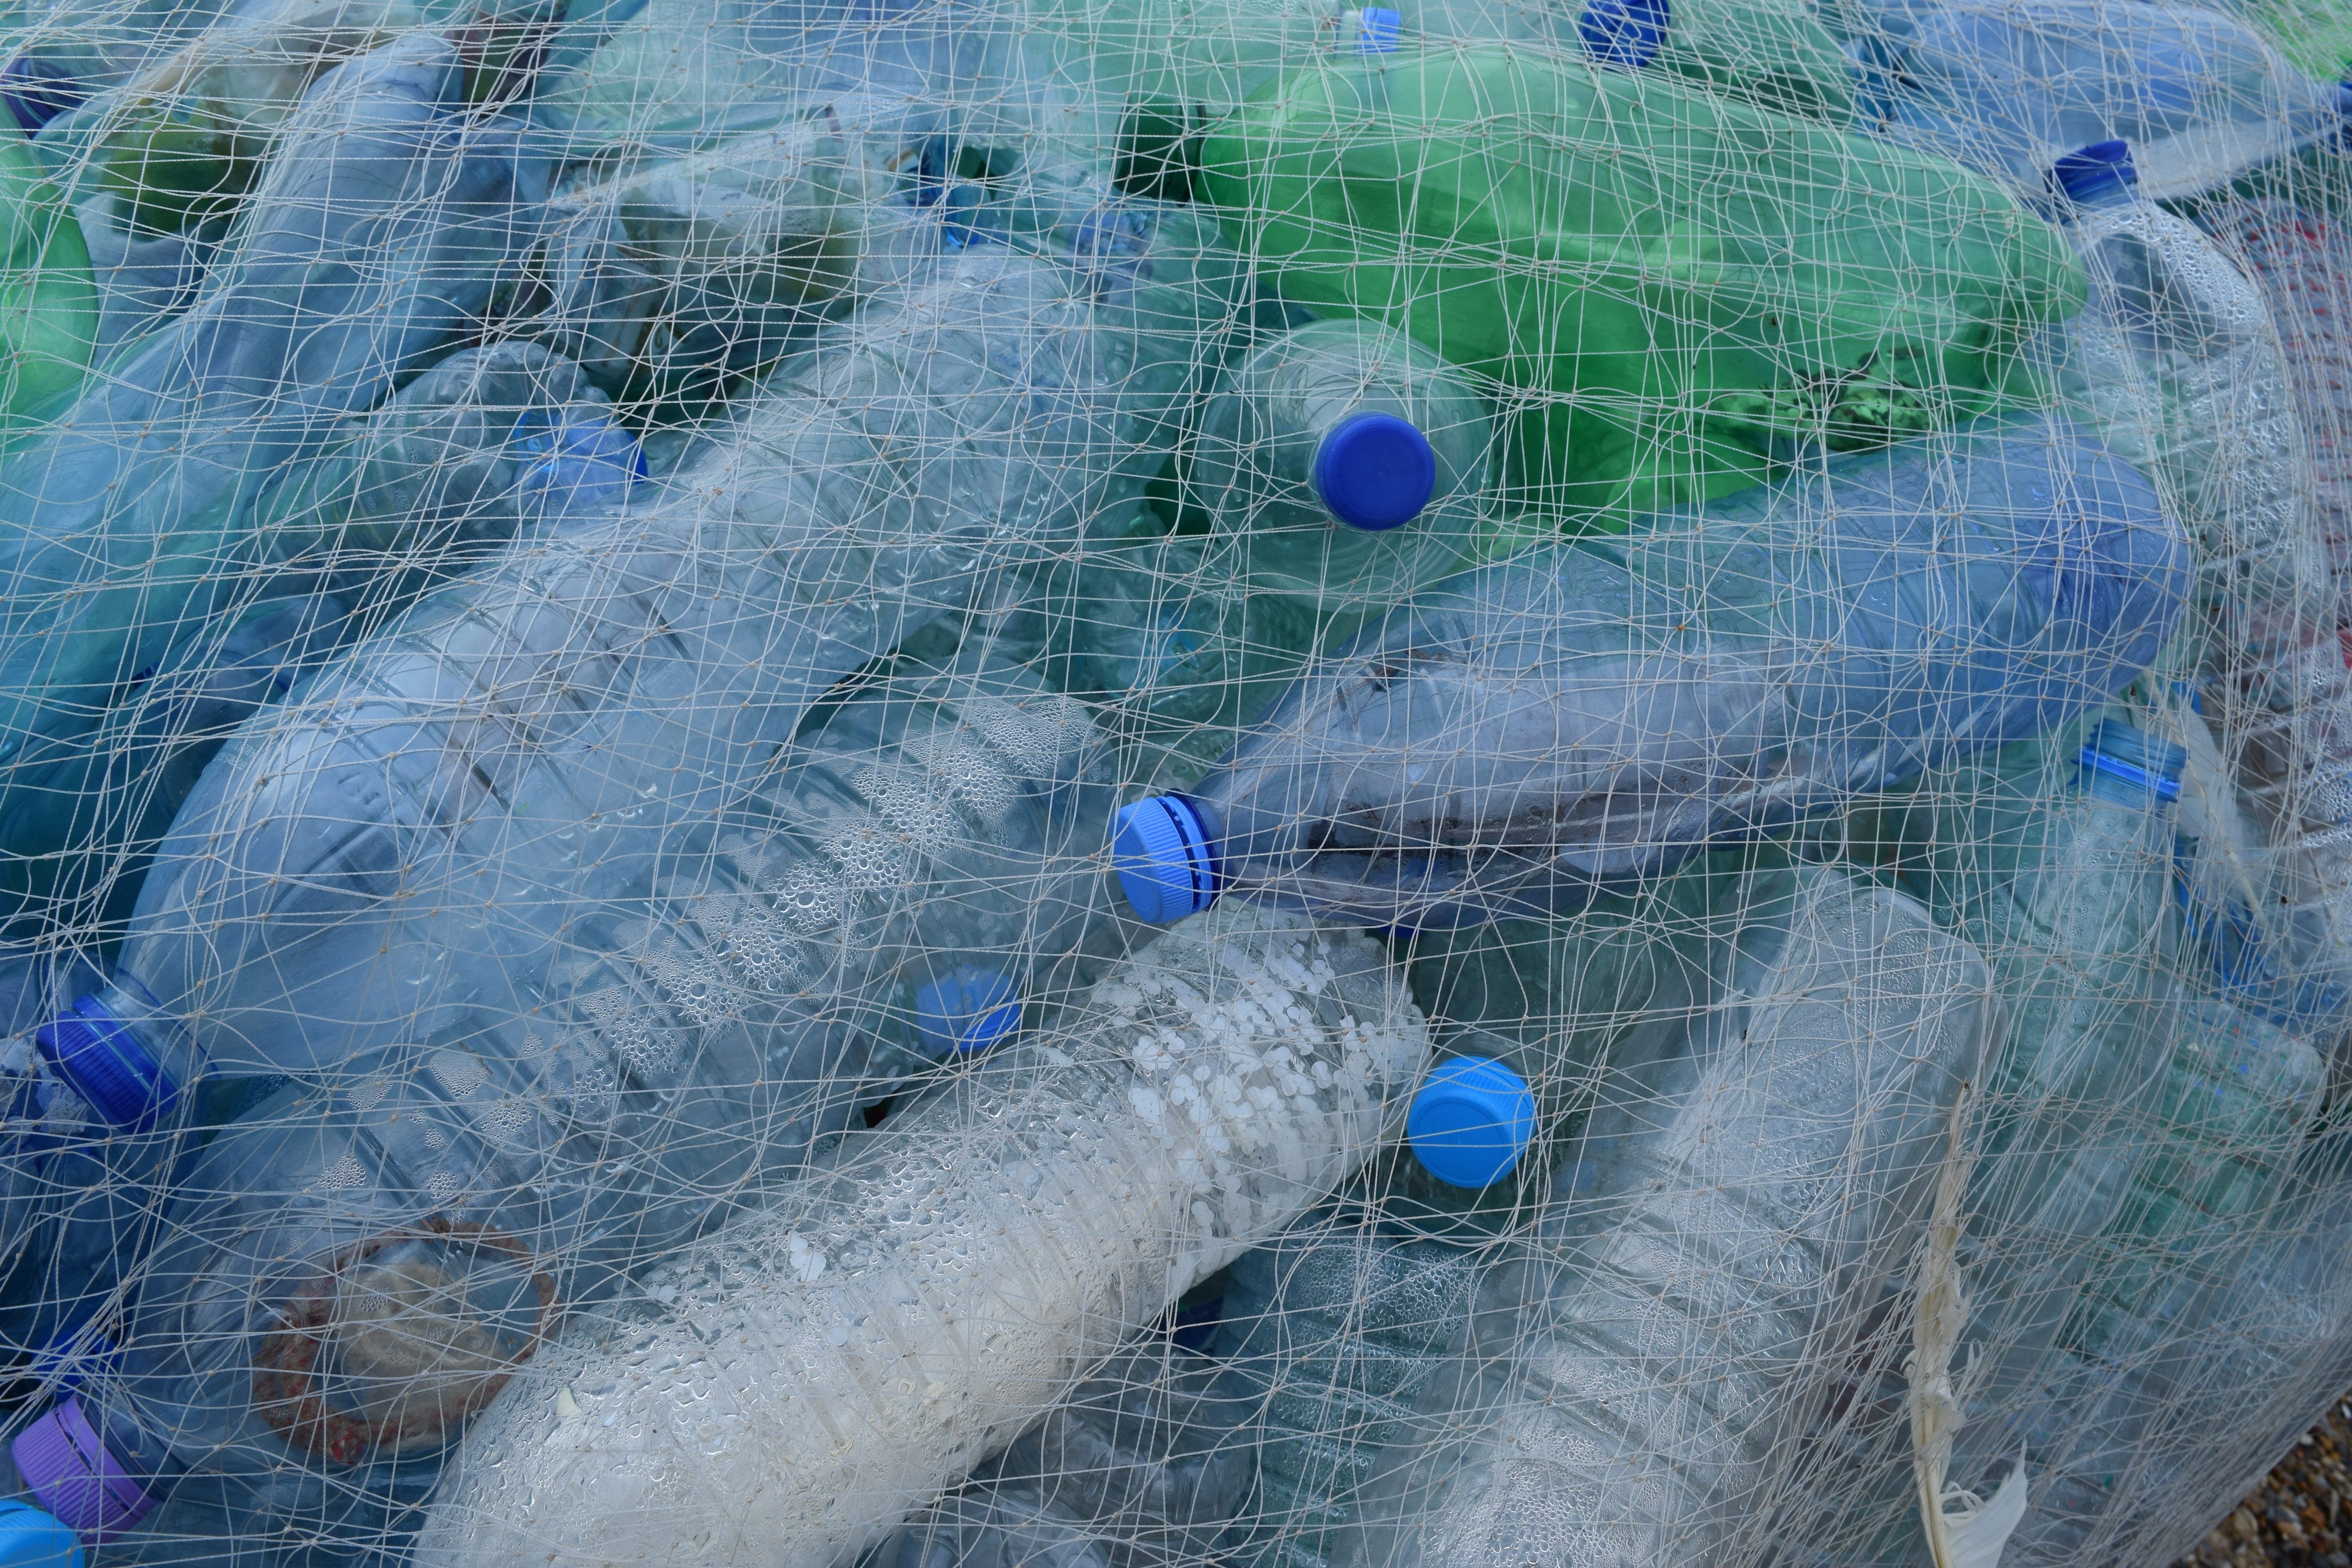 clear plastic disposable bottles